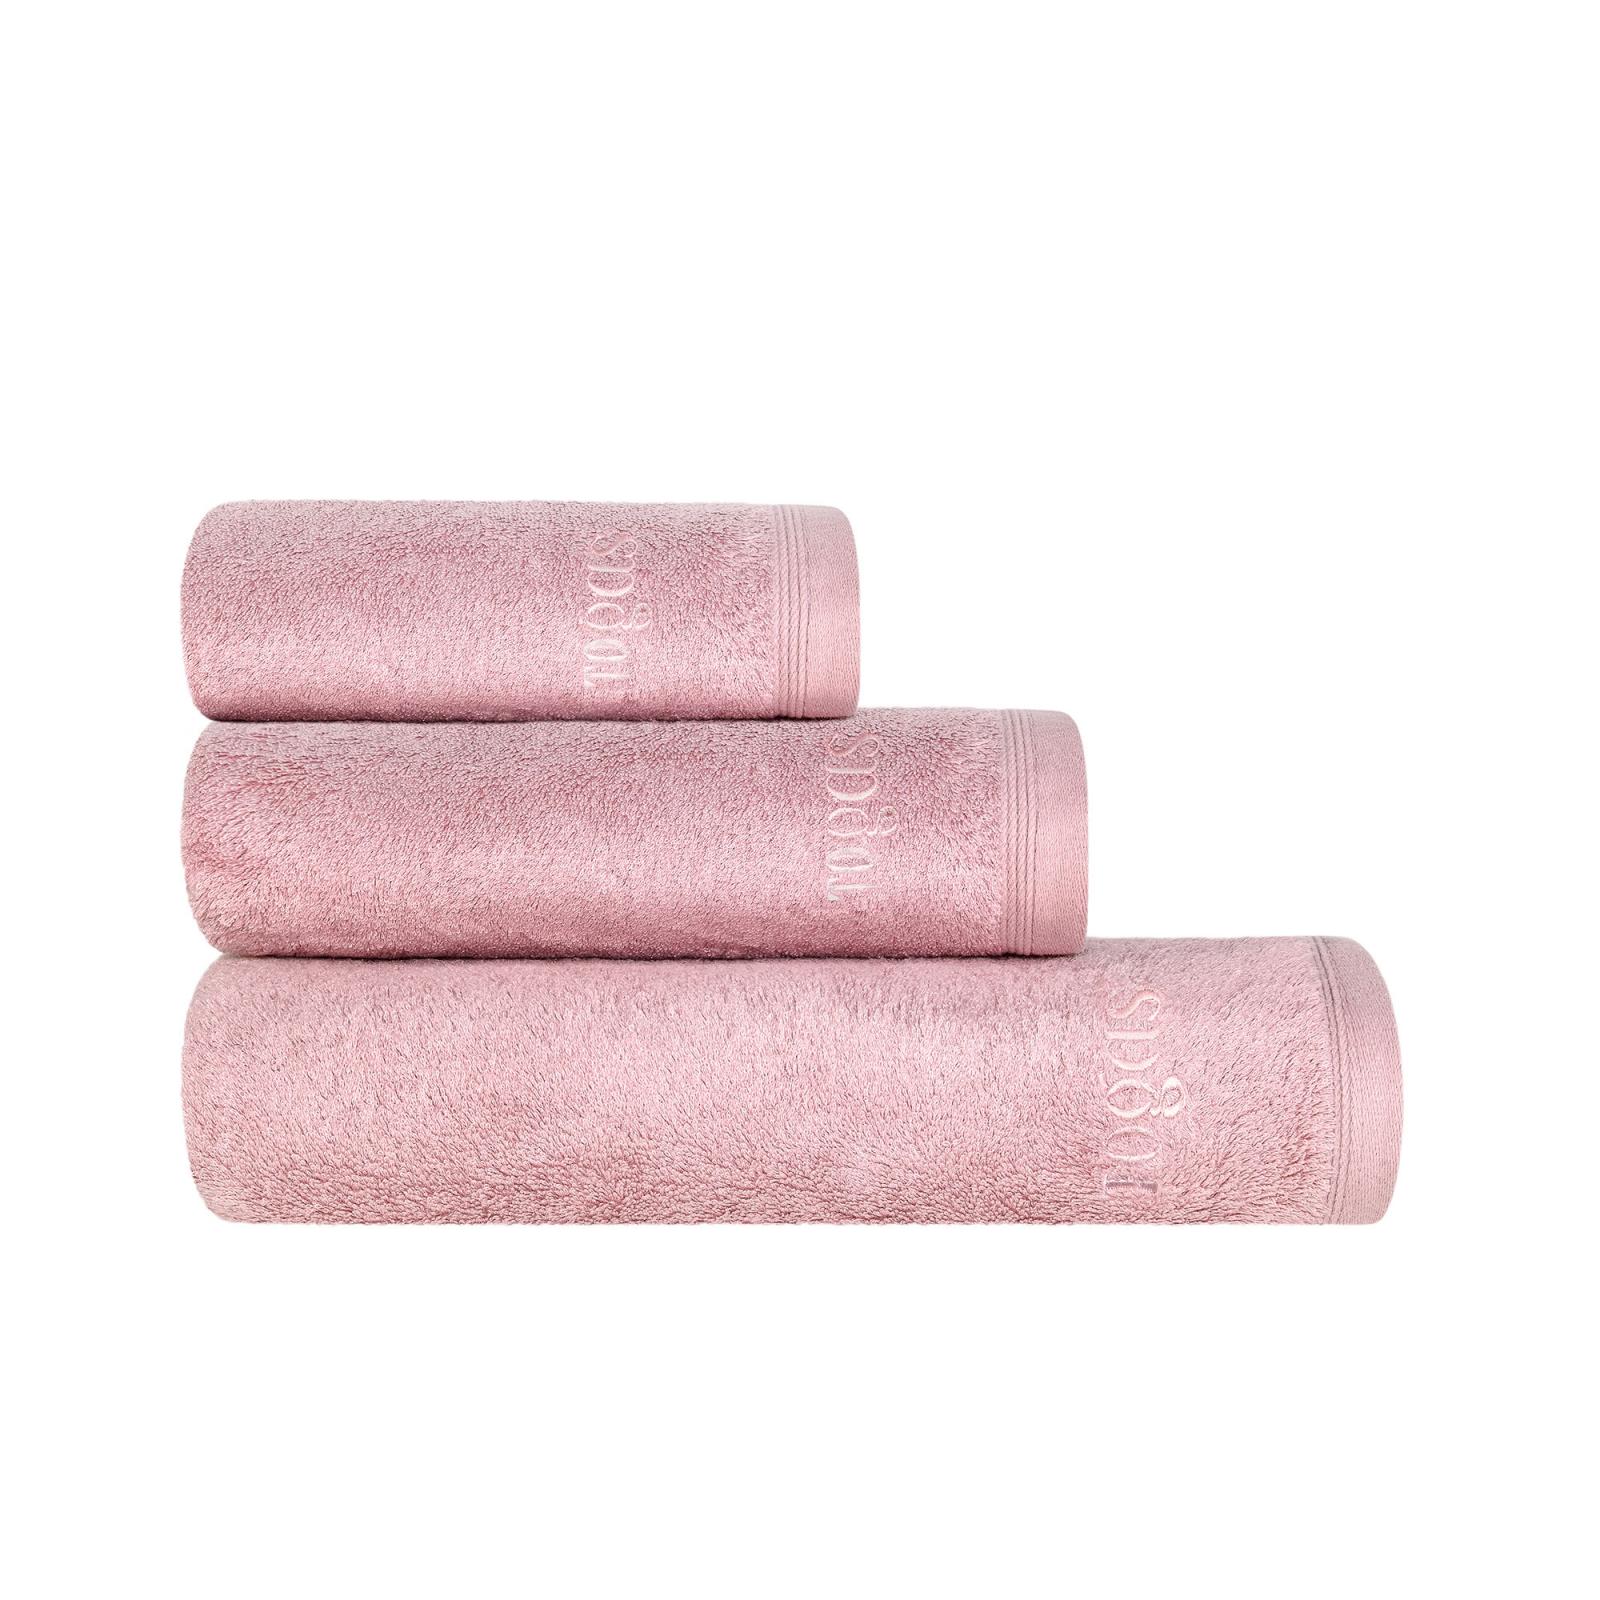 Полотенце 40х60 см Пуатье розовое Togas полотенце 40х60 см пуатье сливовое togas